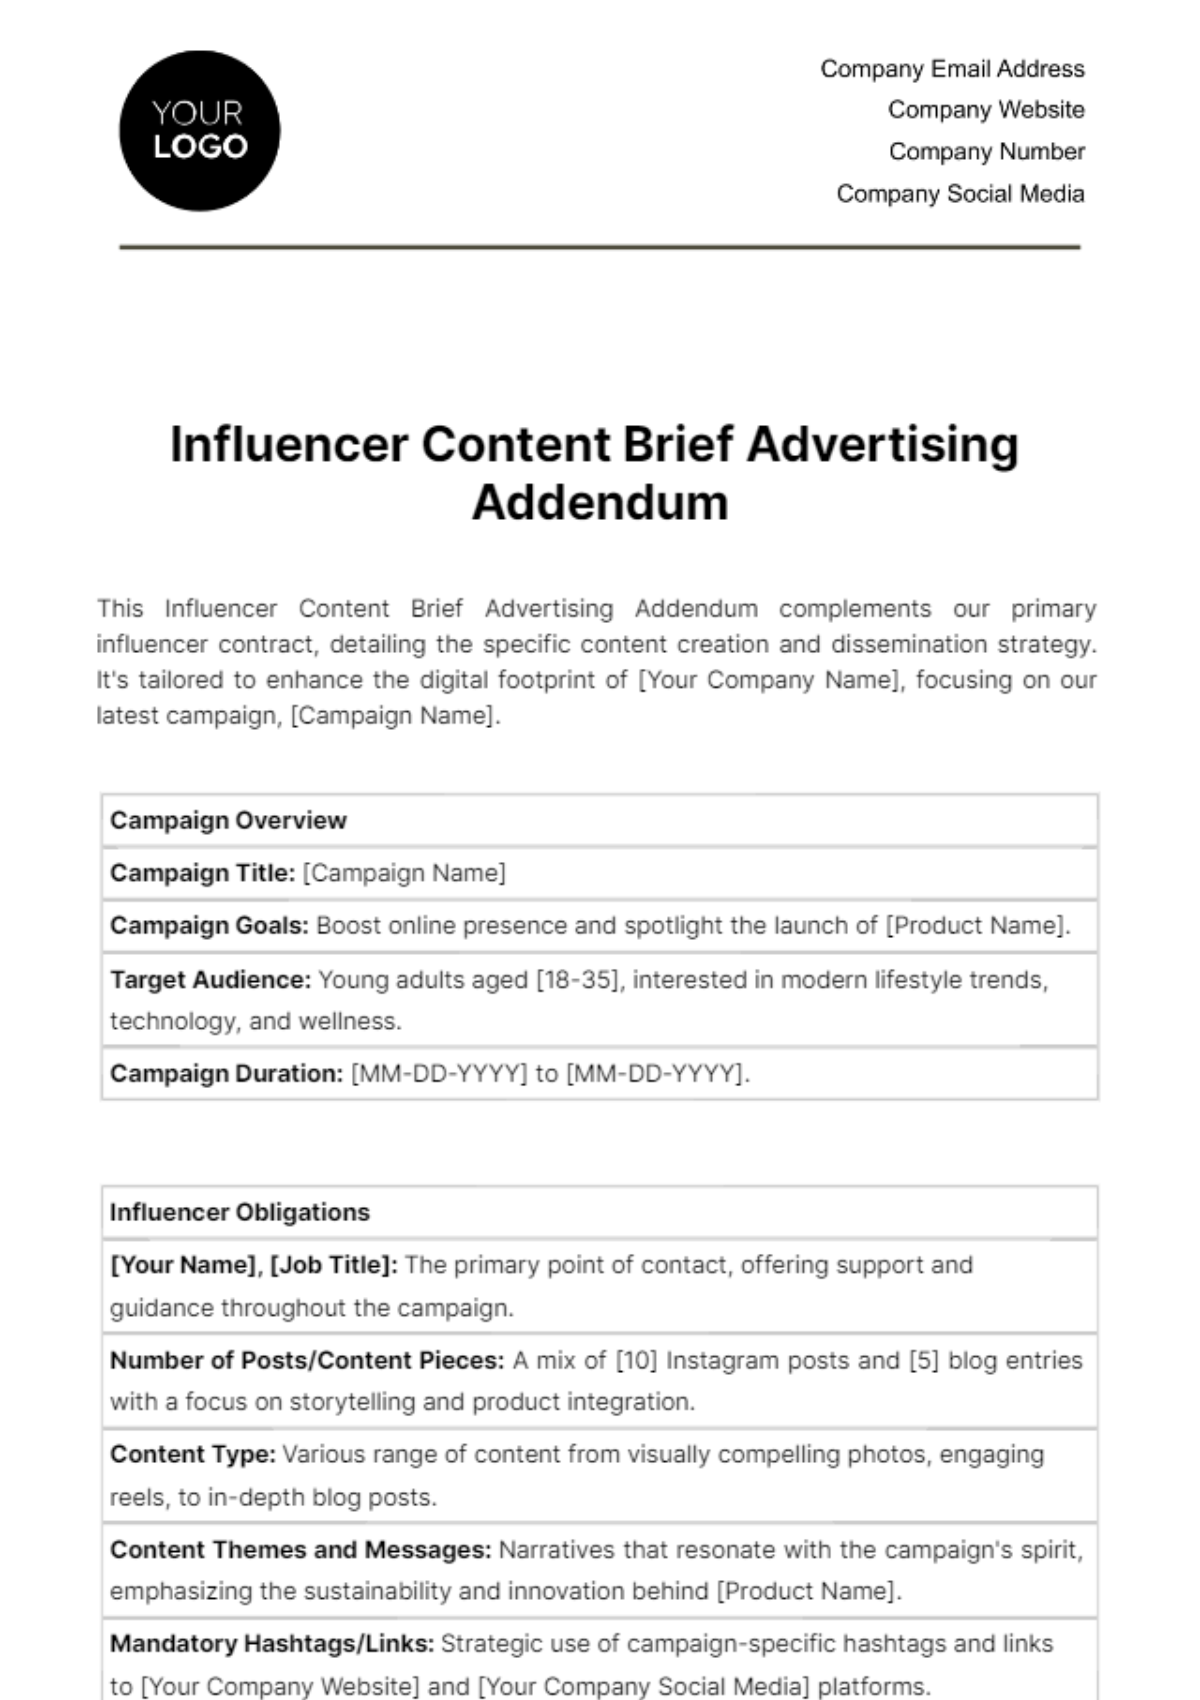 Influencer Content Brief Advertising Addendum Template